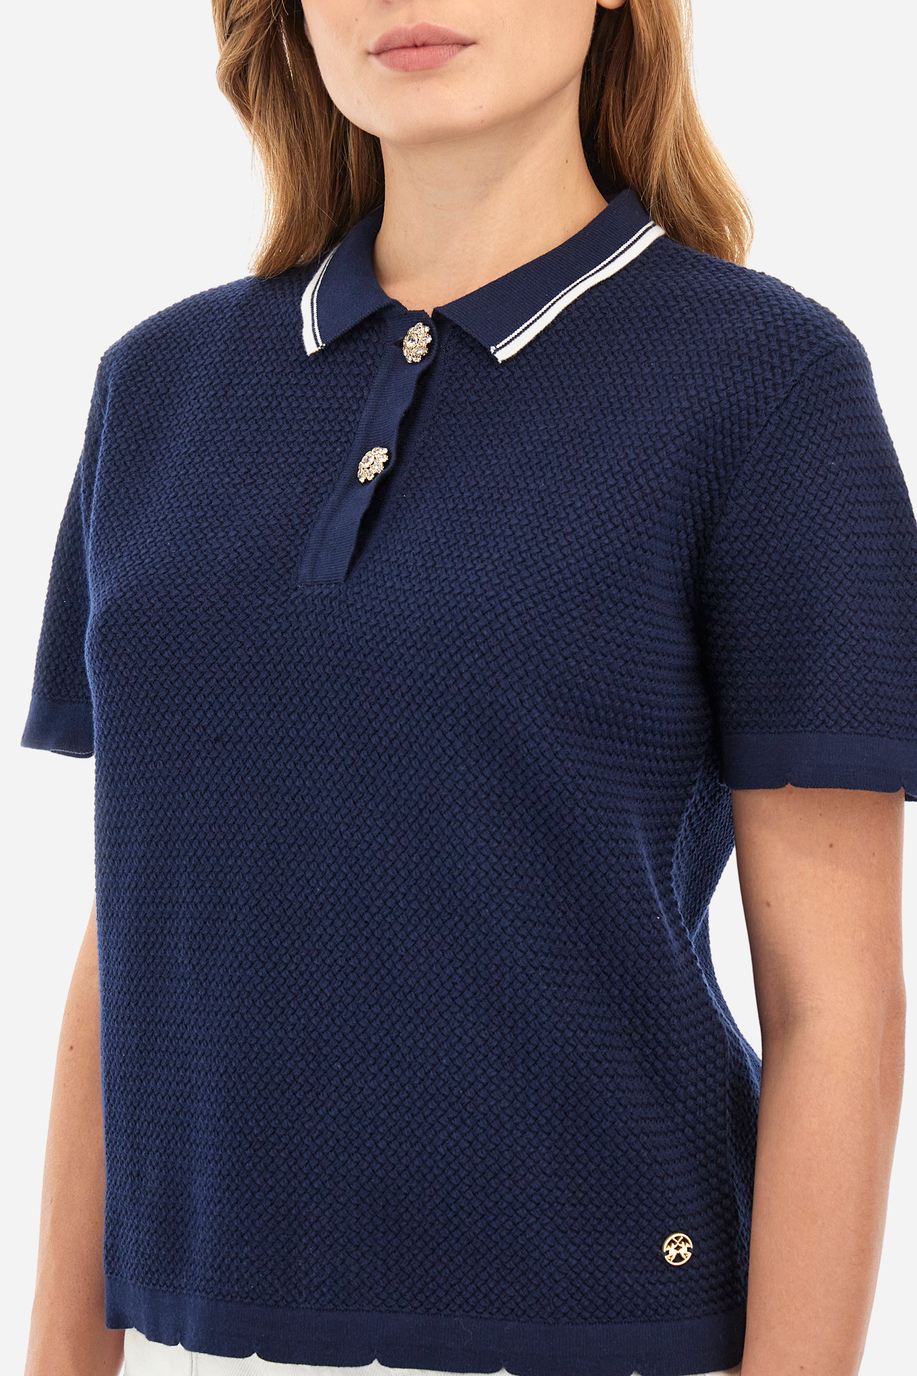 Polo Guards in maglia regular fit in cotone - Yesmina - Polo | La Martina - Official Online Shop